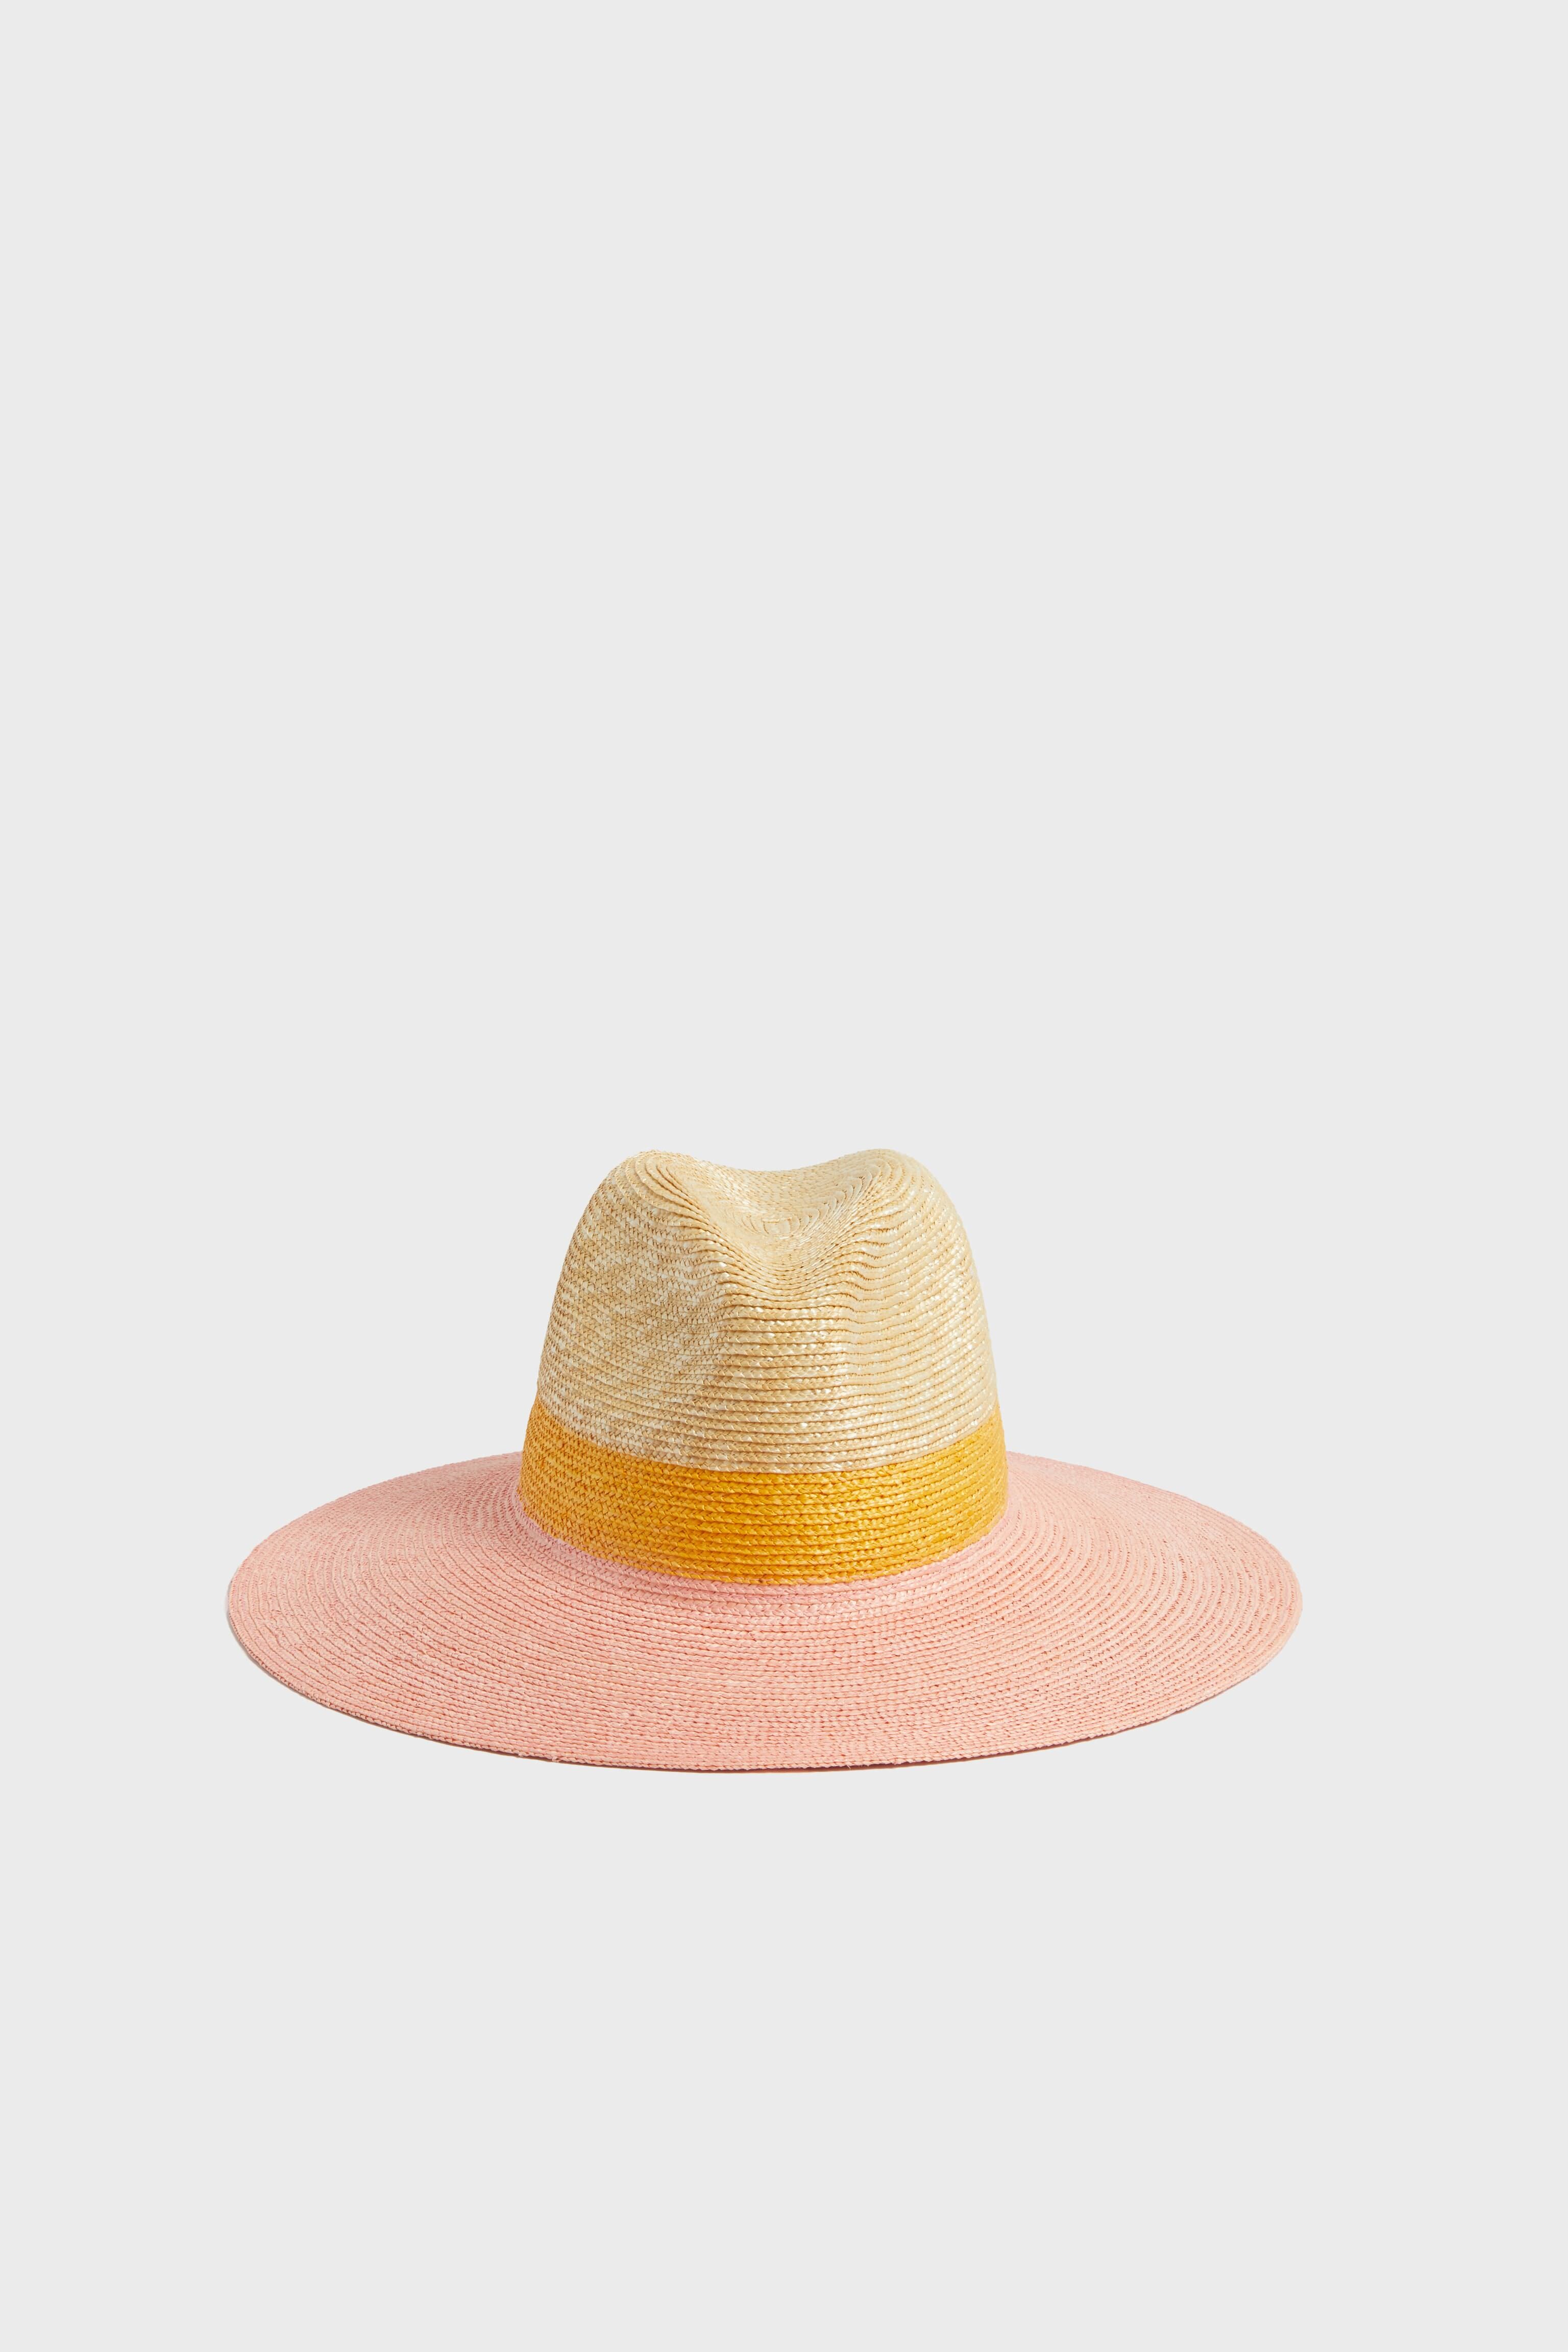 Wyeth Bondi Color Block Wheat Straw Panama Hat - Multi